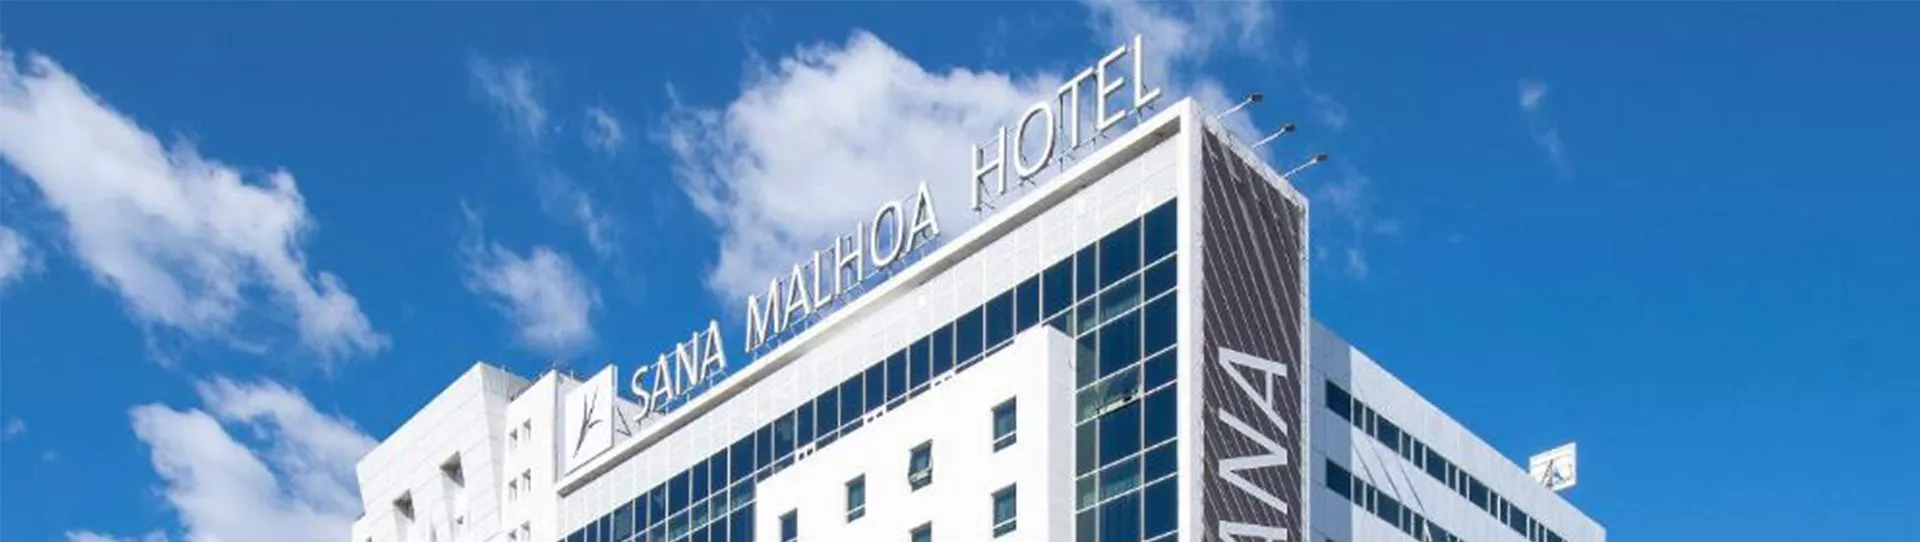 Portugal golf holidays - SANA Malhoa Hotel - Photo 1